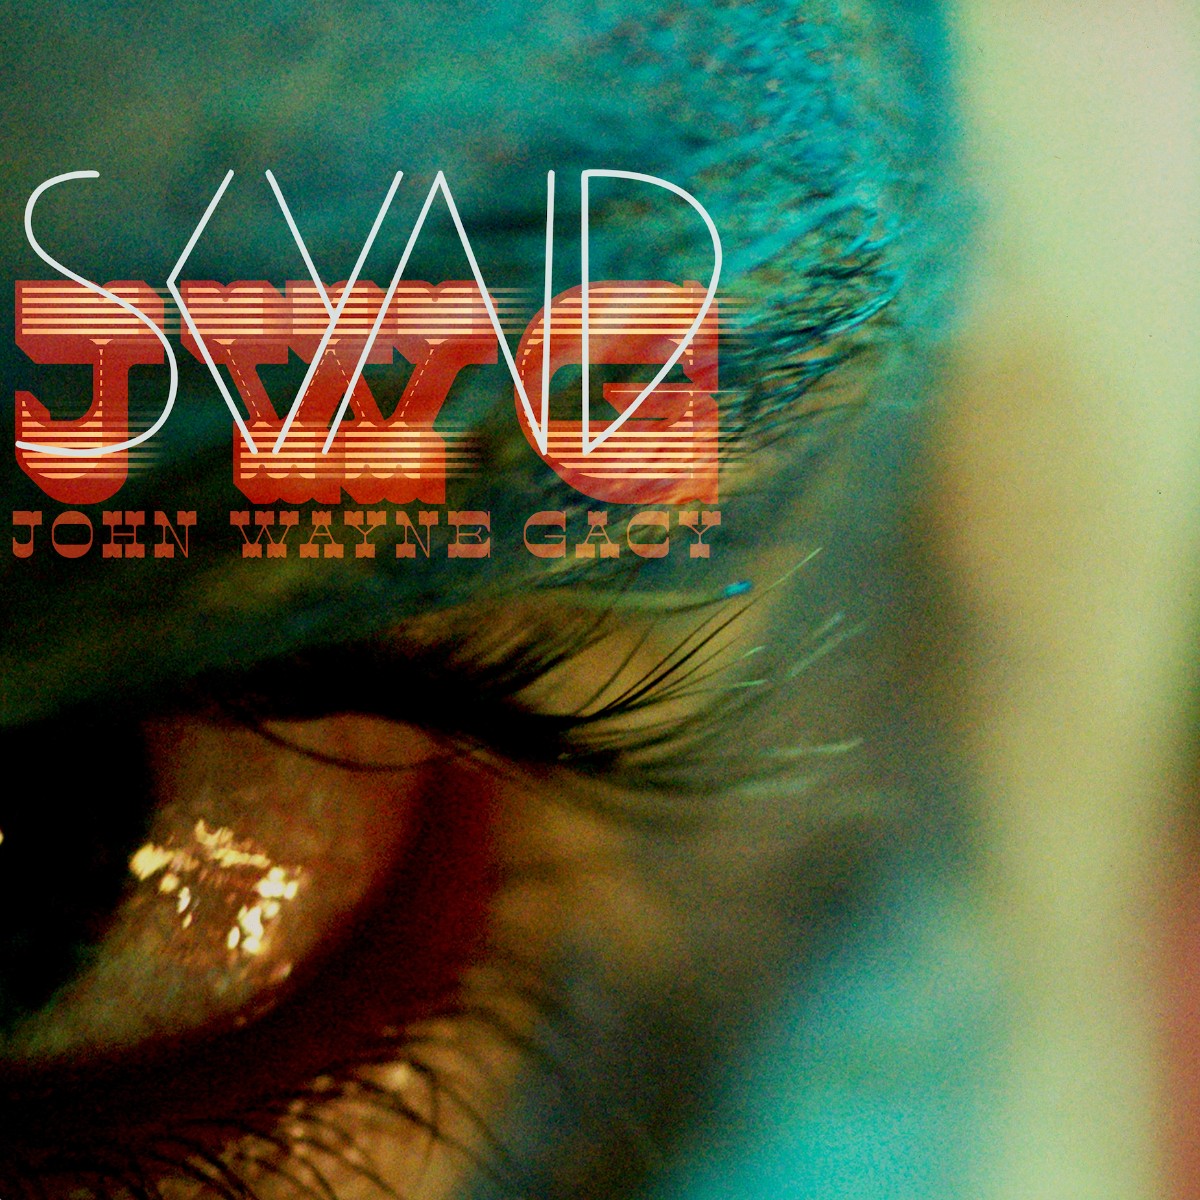 Skynd “John Wayne Gacy” single artwork